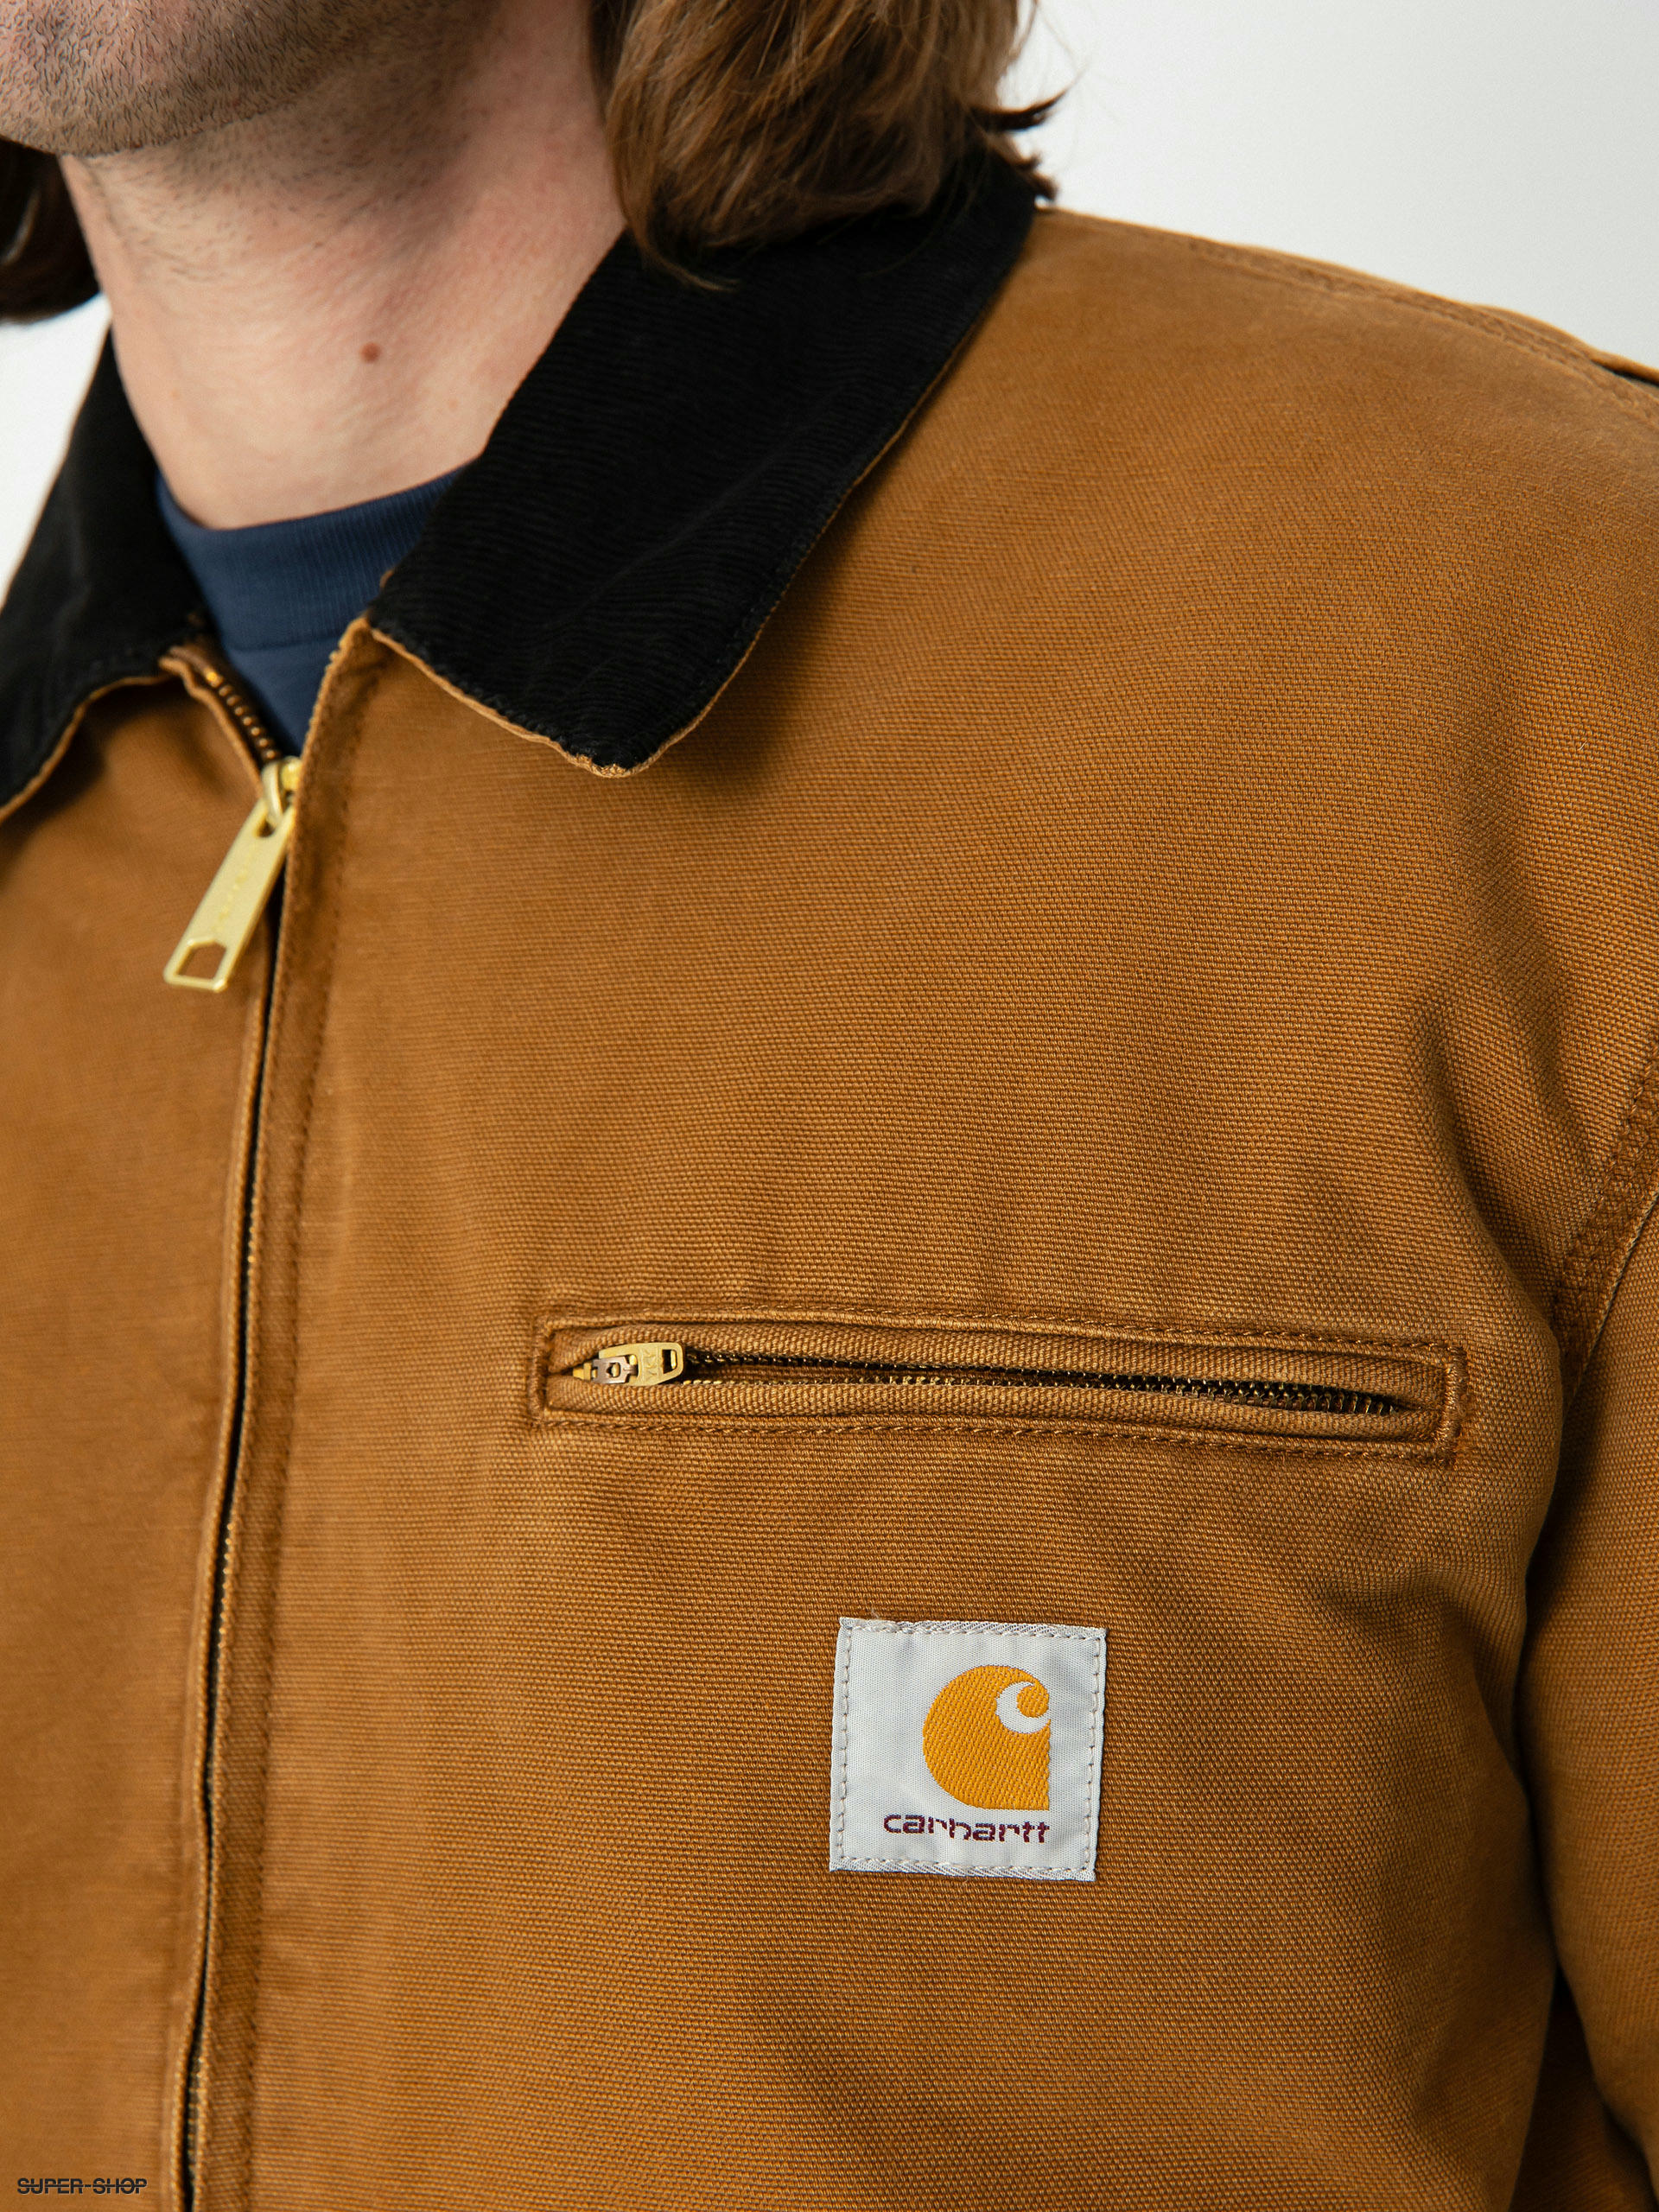 Carhartt WIP - Og Active Aged Canvas Deep H Brown - Jacket